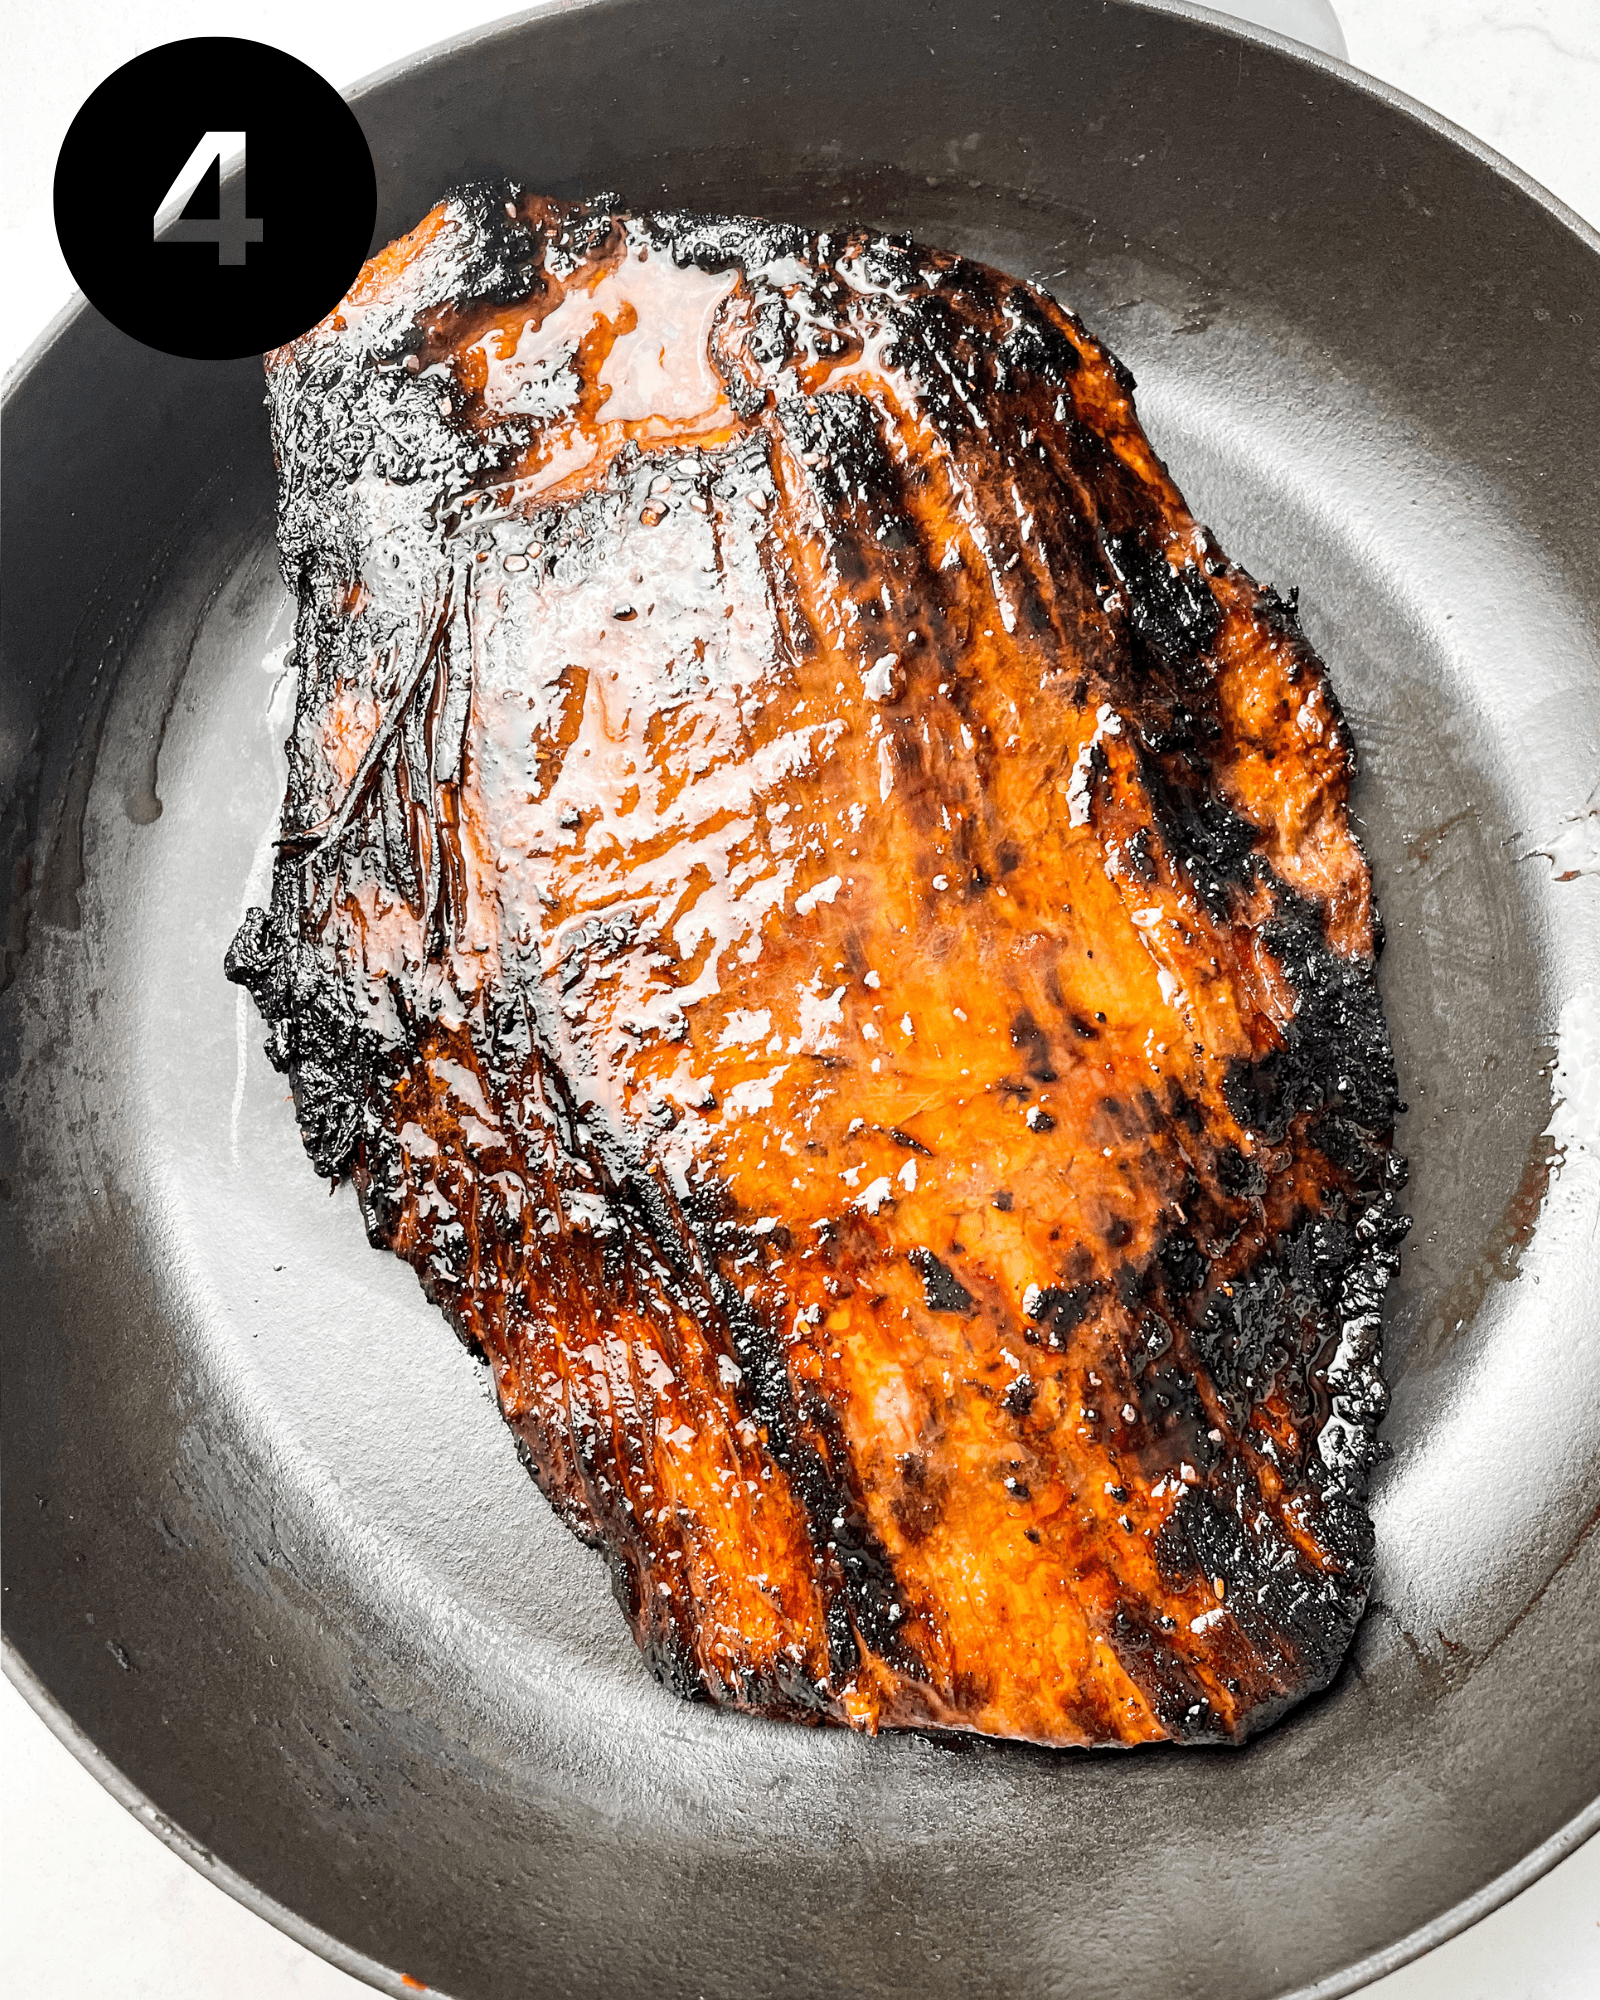 bavette steak in a cast iron pan.